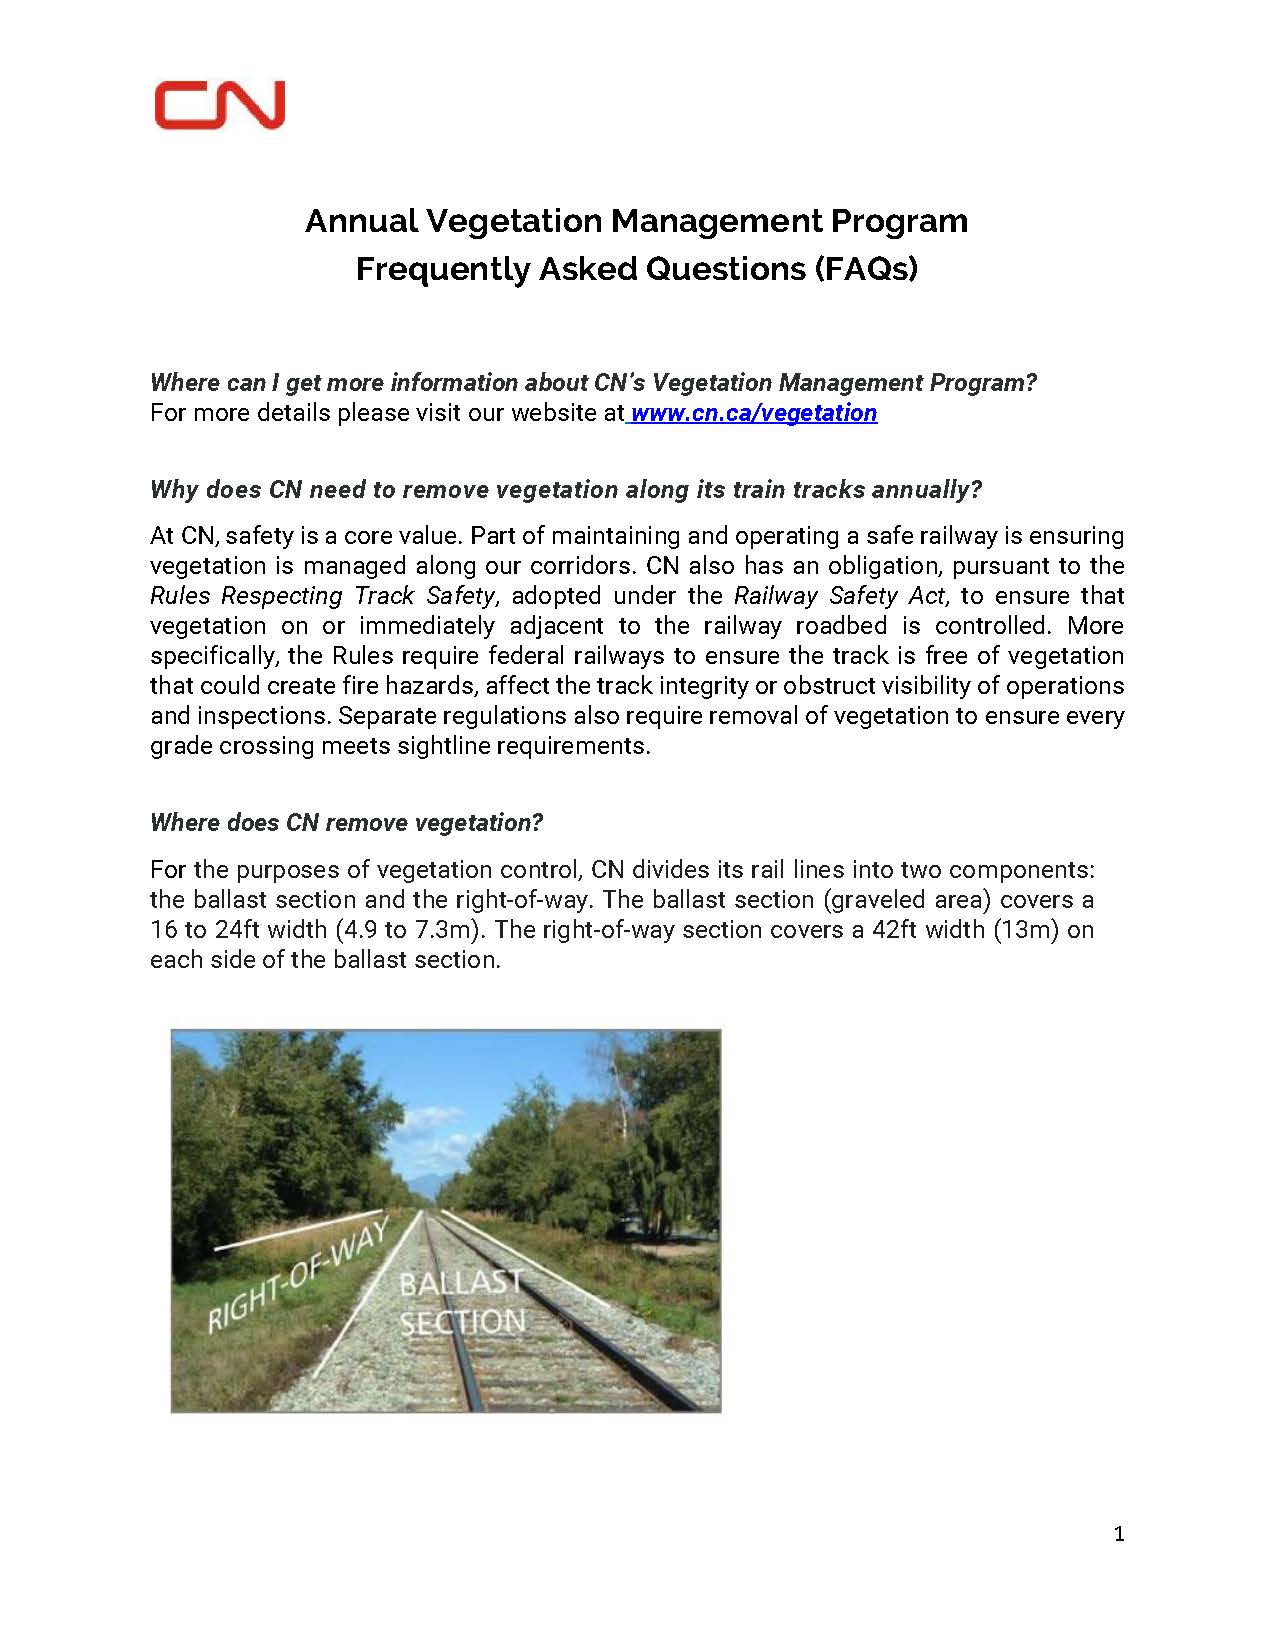 2022 CN vegetation FAQ. Page 01